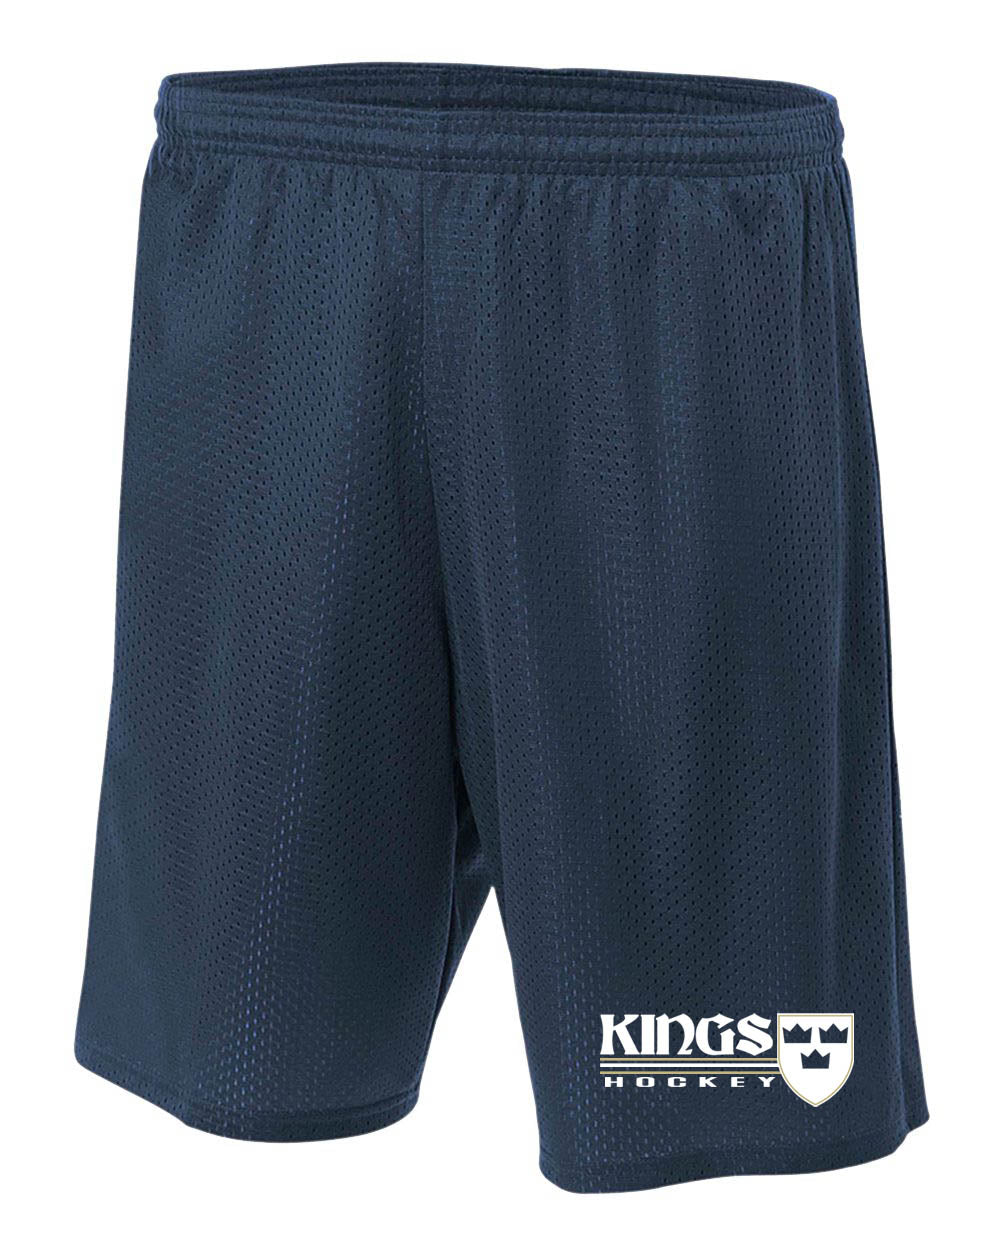 Kings Hockey Design 3 Shorts